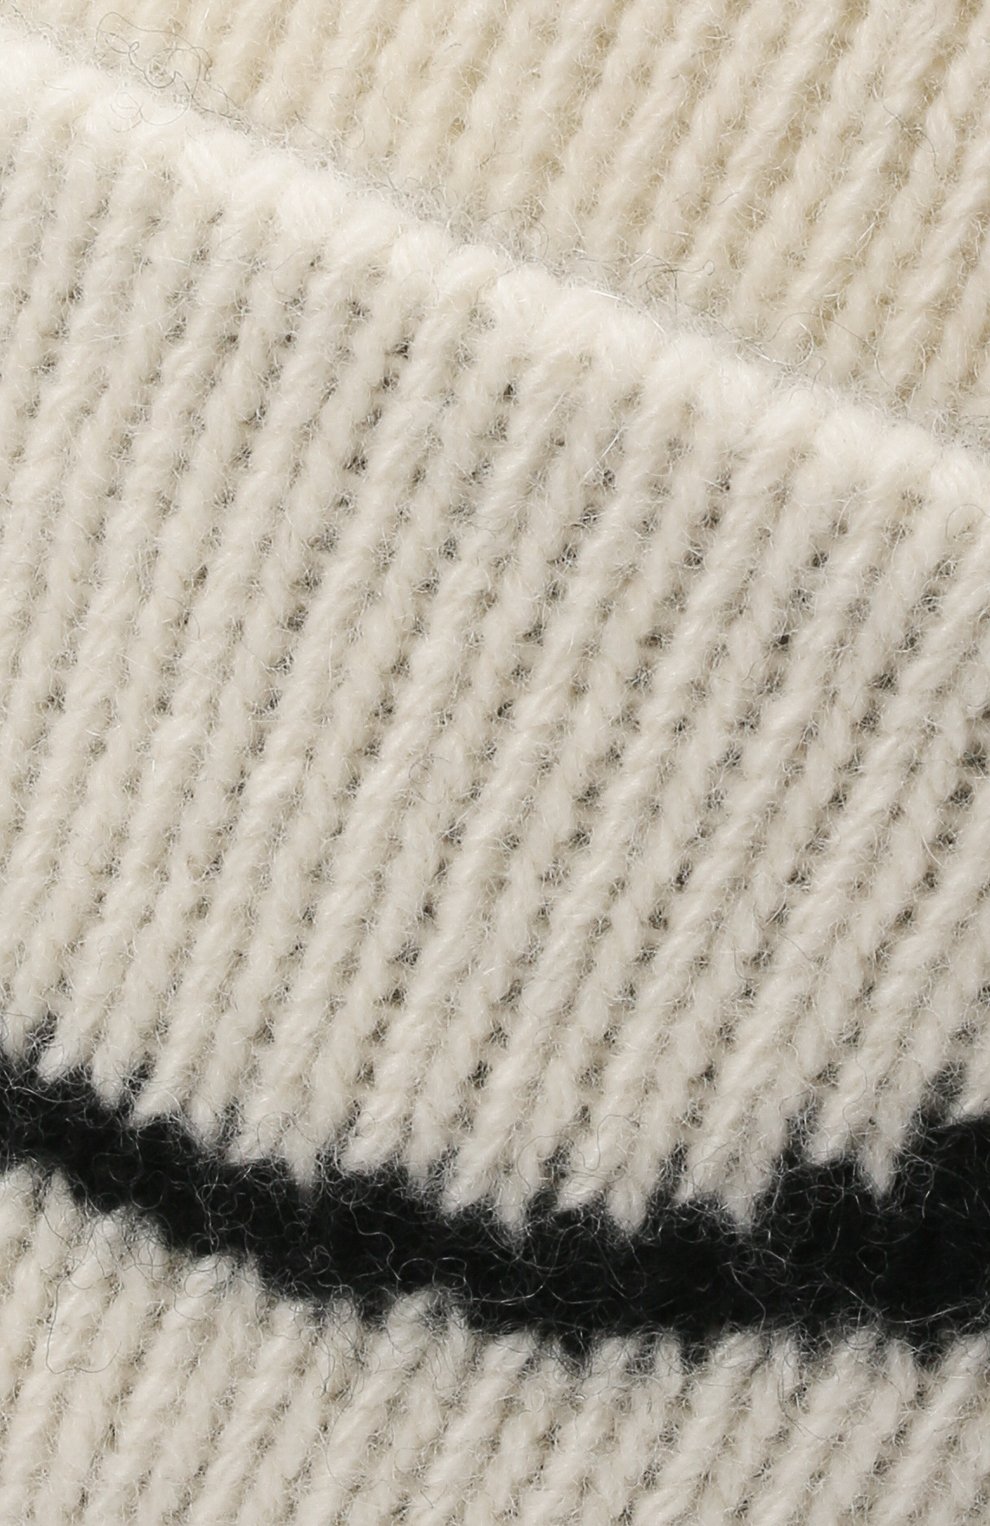 Мужская шапка из шерсти и каш емира VALENTINO кремвого цвета, арт. WY0HB00Y/RAI | Фото 3 (Материал: Текстиль, Кашемир, Шерсть; Кросс-КТ: Трикотаж)